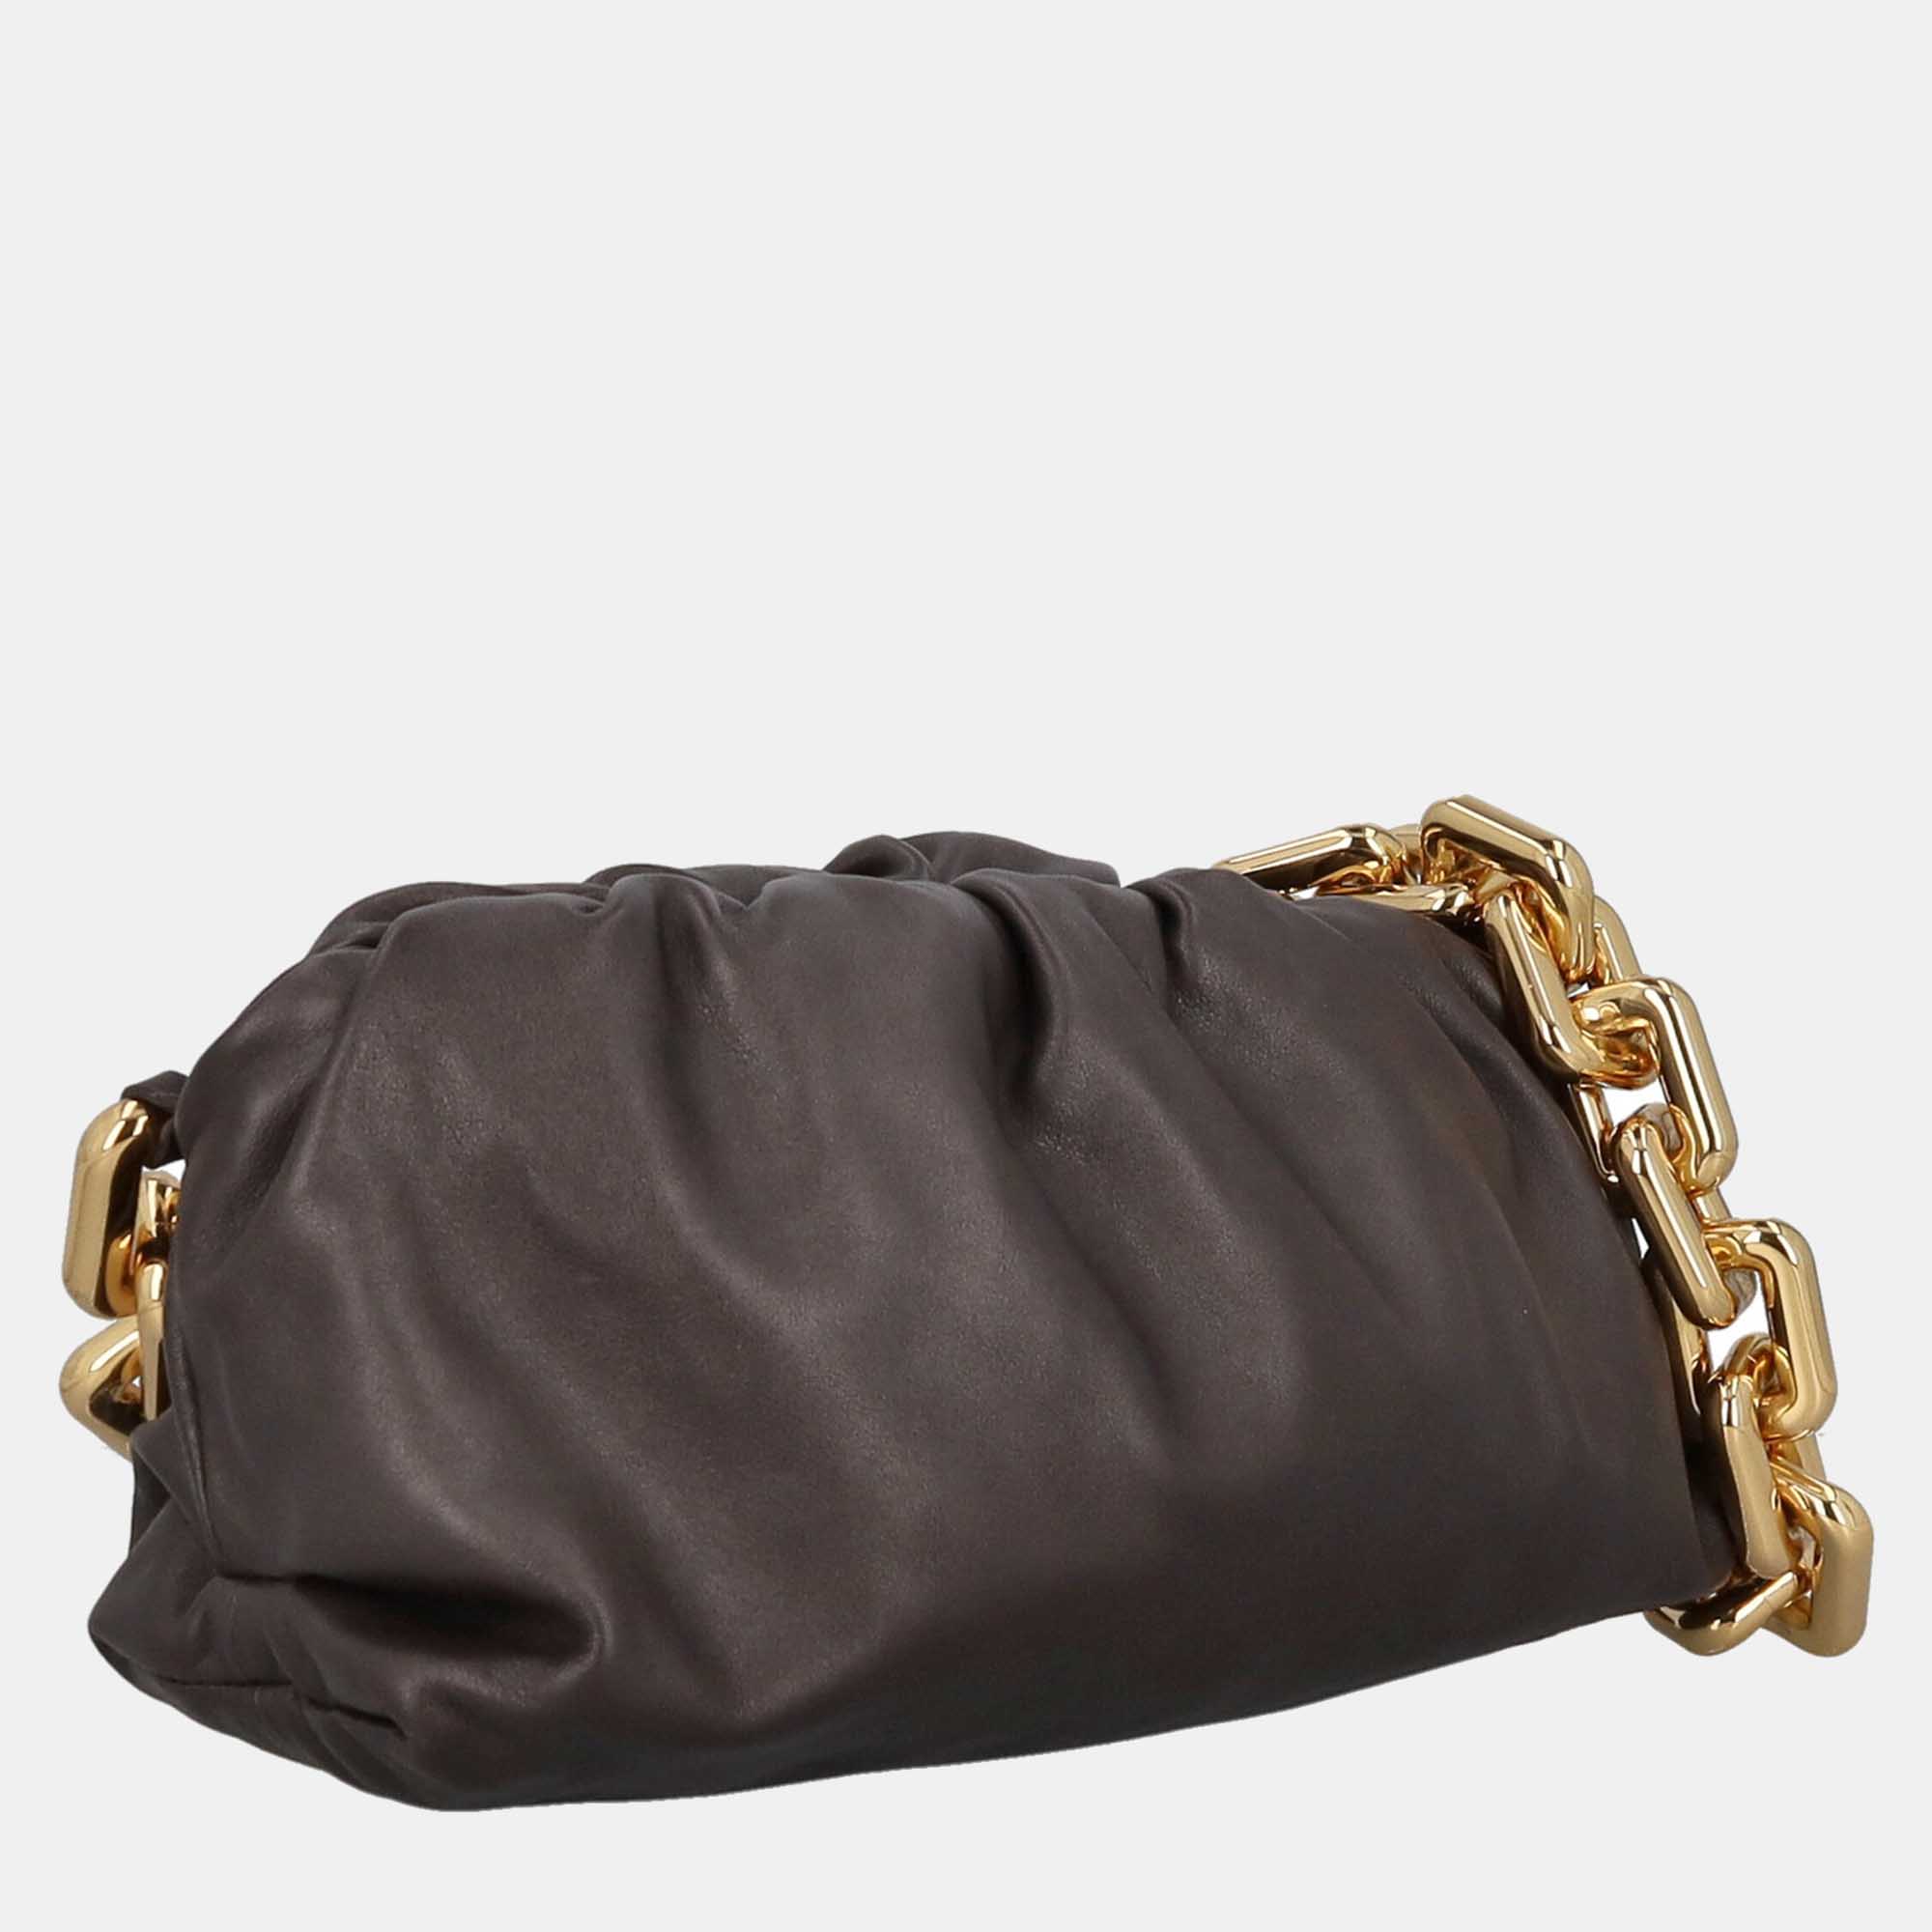 Bottega Veneta  Women's Leather Handbag - Brown - One Size